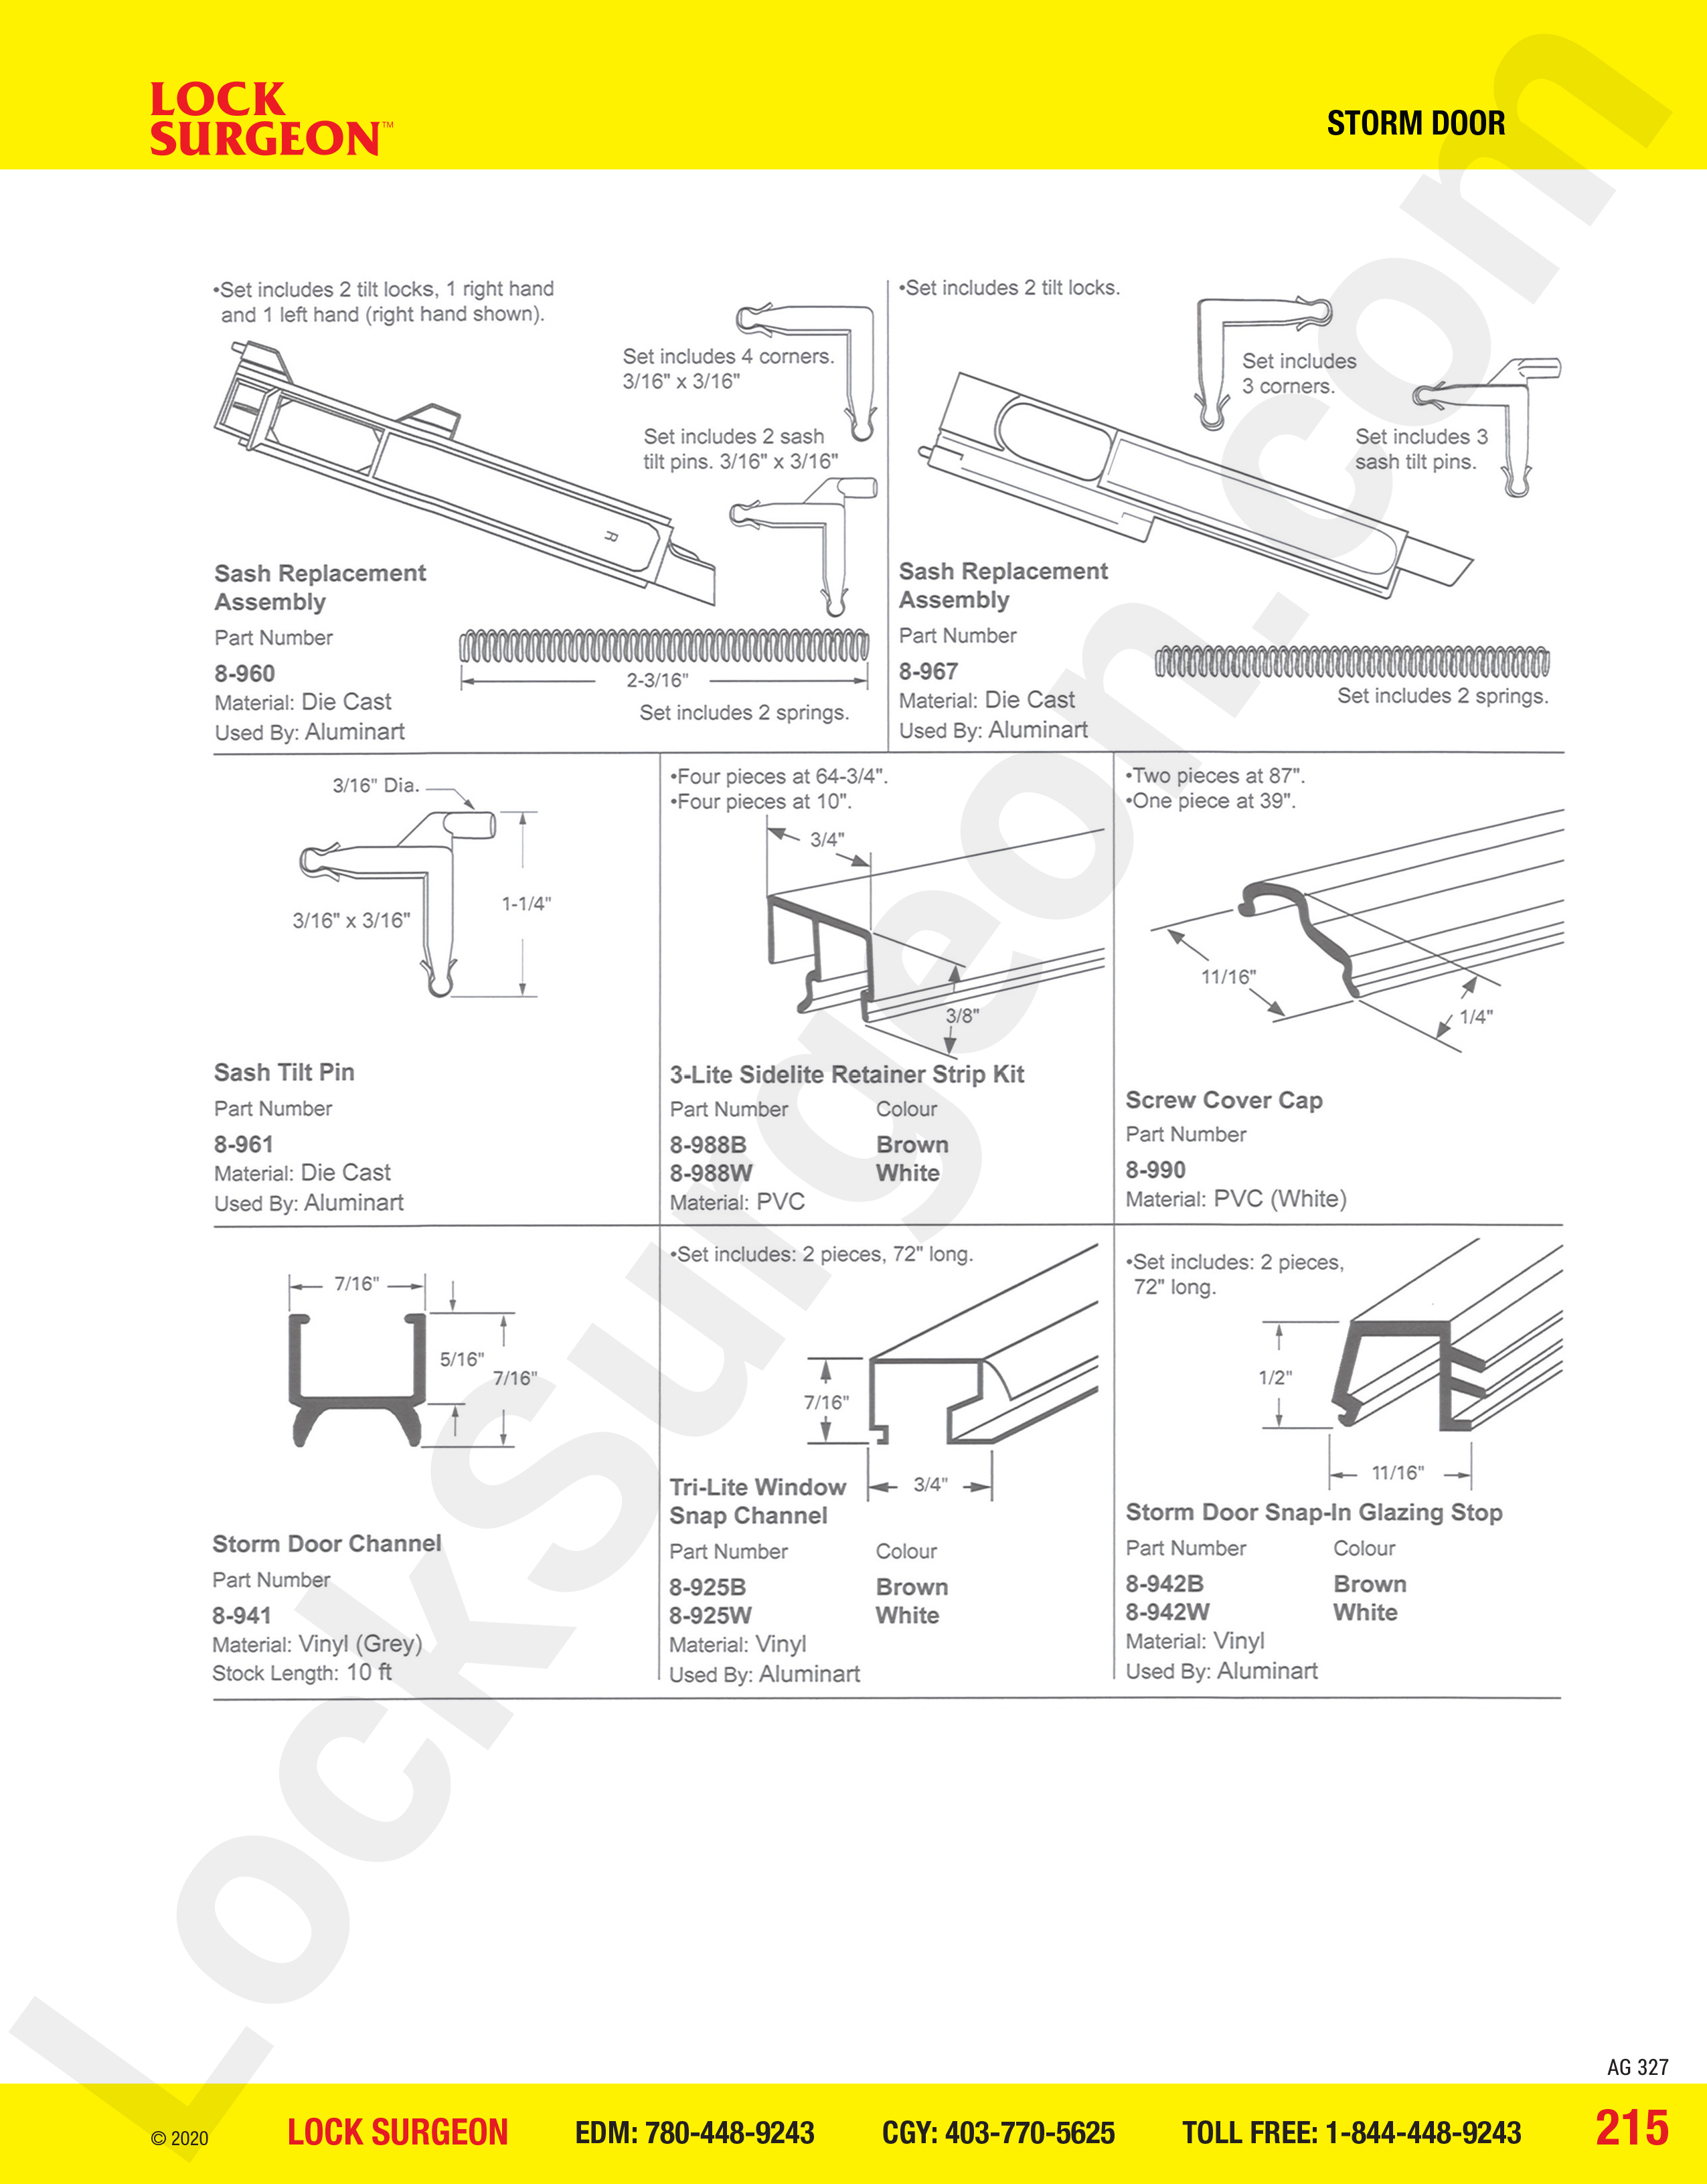 sash replacement assembly, Aluminart sash replacement assembly, sash tilt pin, retainer strip kit